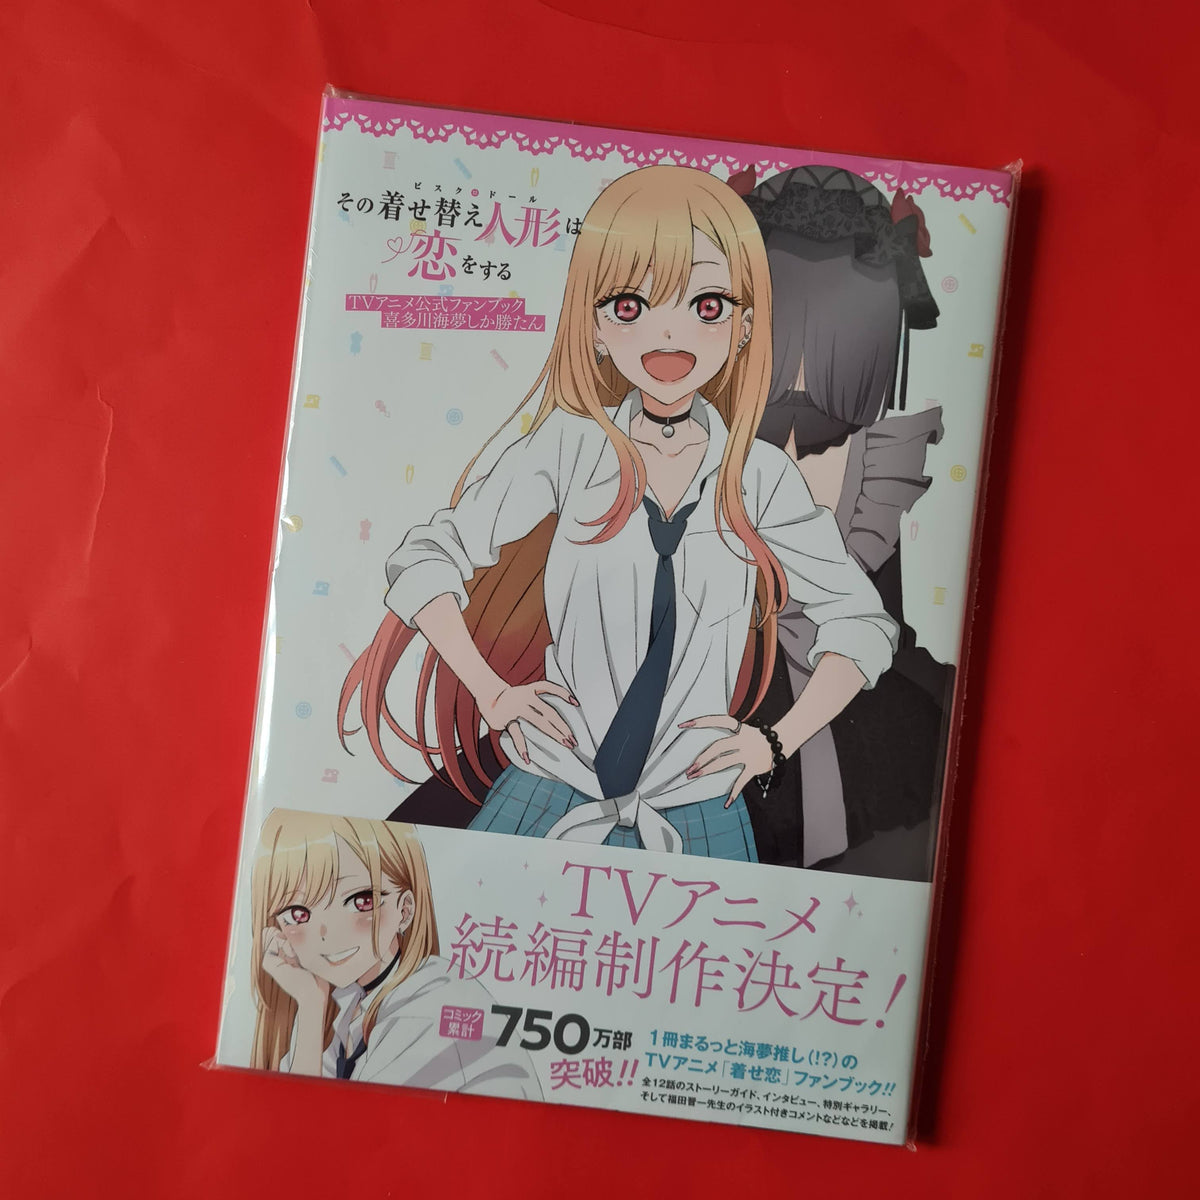 📕 Sono bisque doll - TV/Anime Artbook 😍 . . 🟦 Tags: #mangacollectio